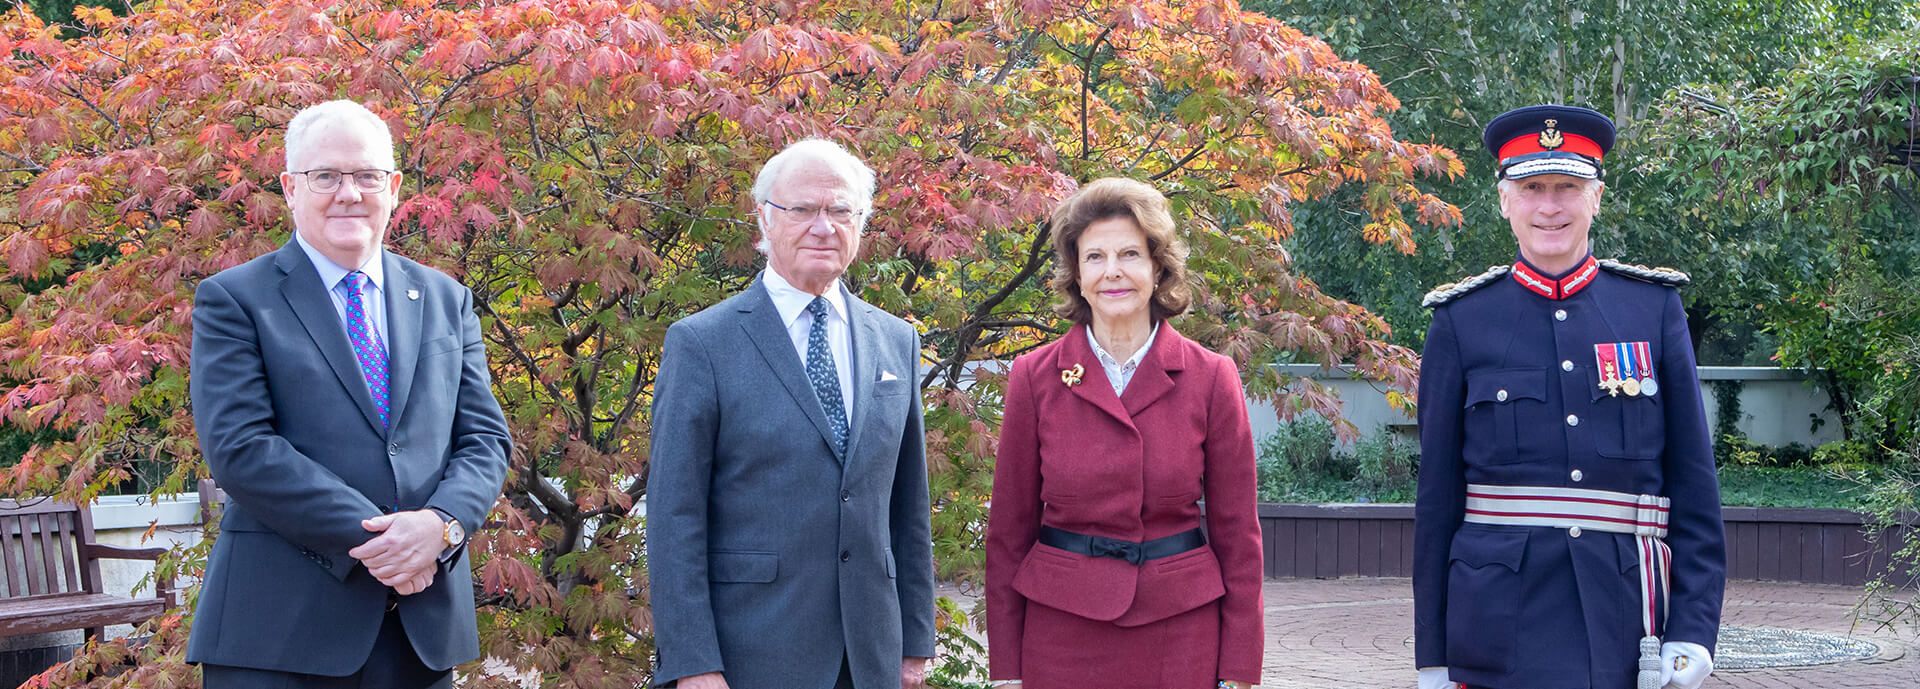 Swedish Royal visit in garden